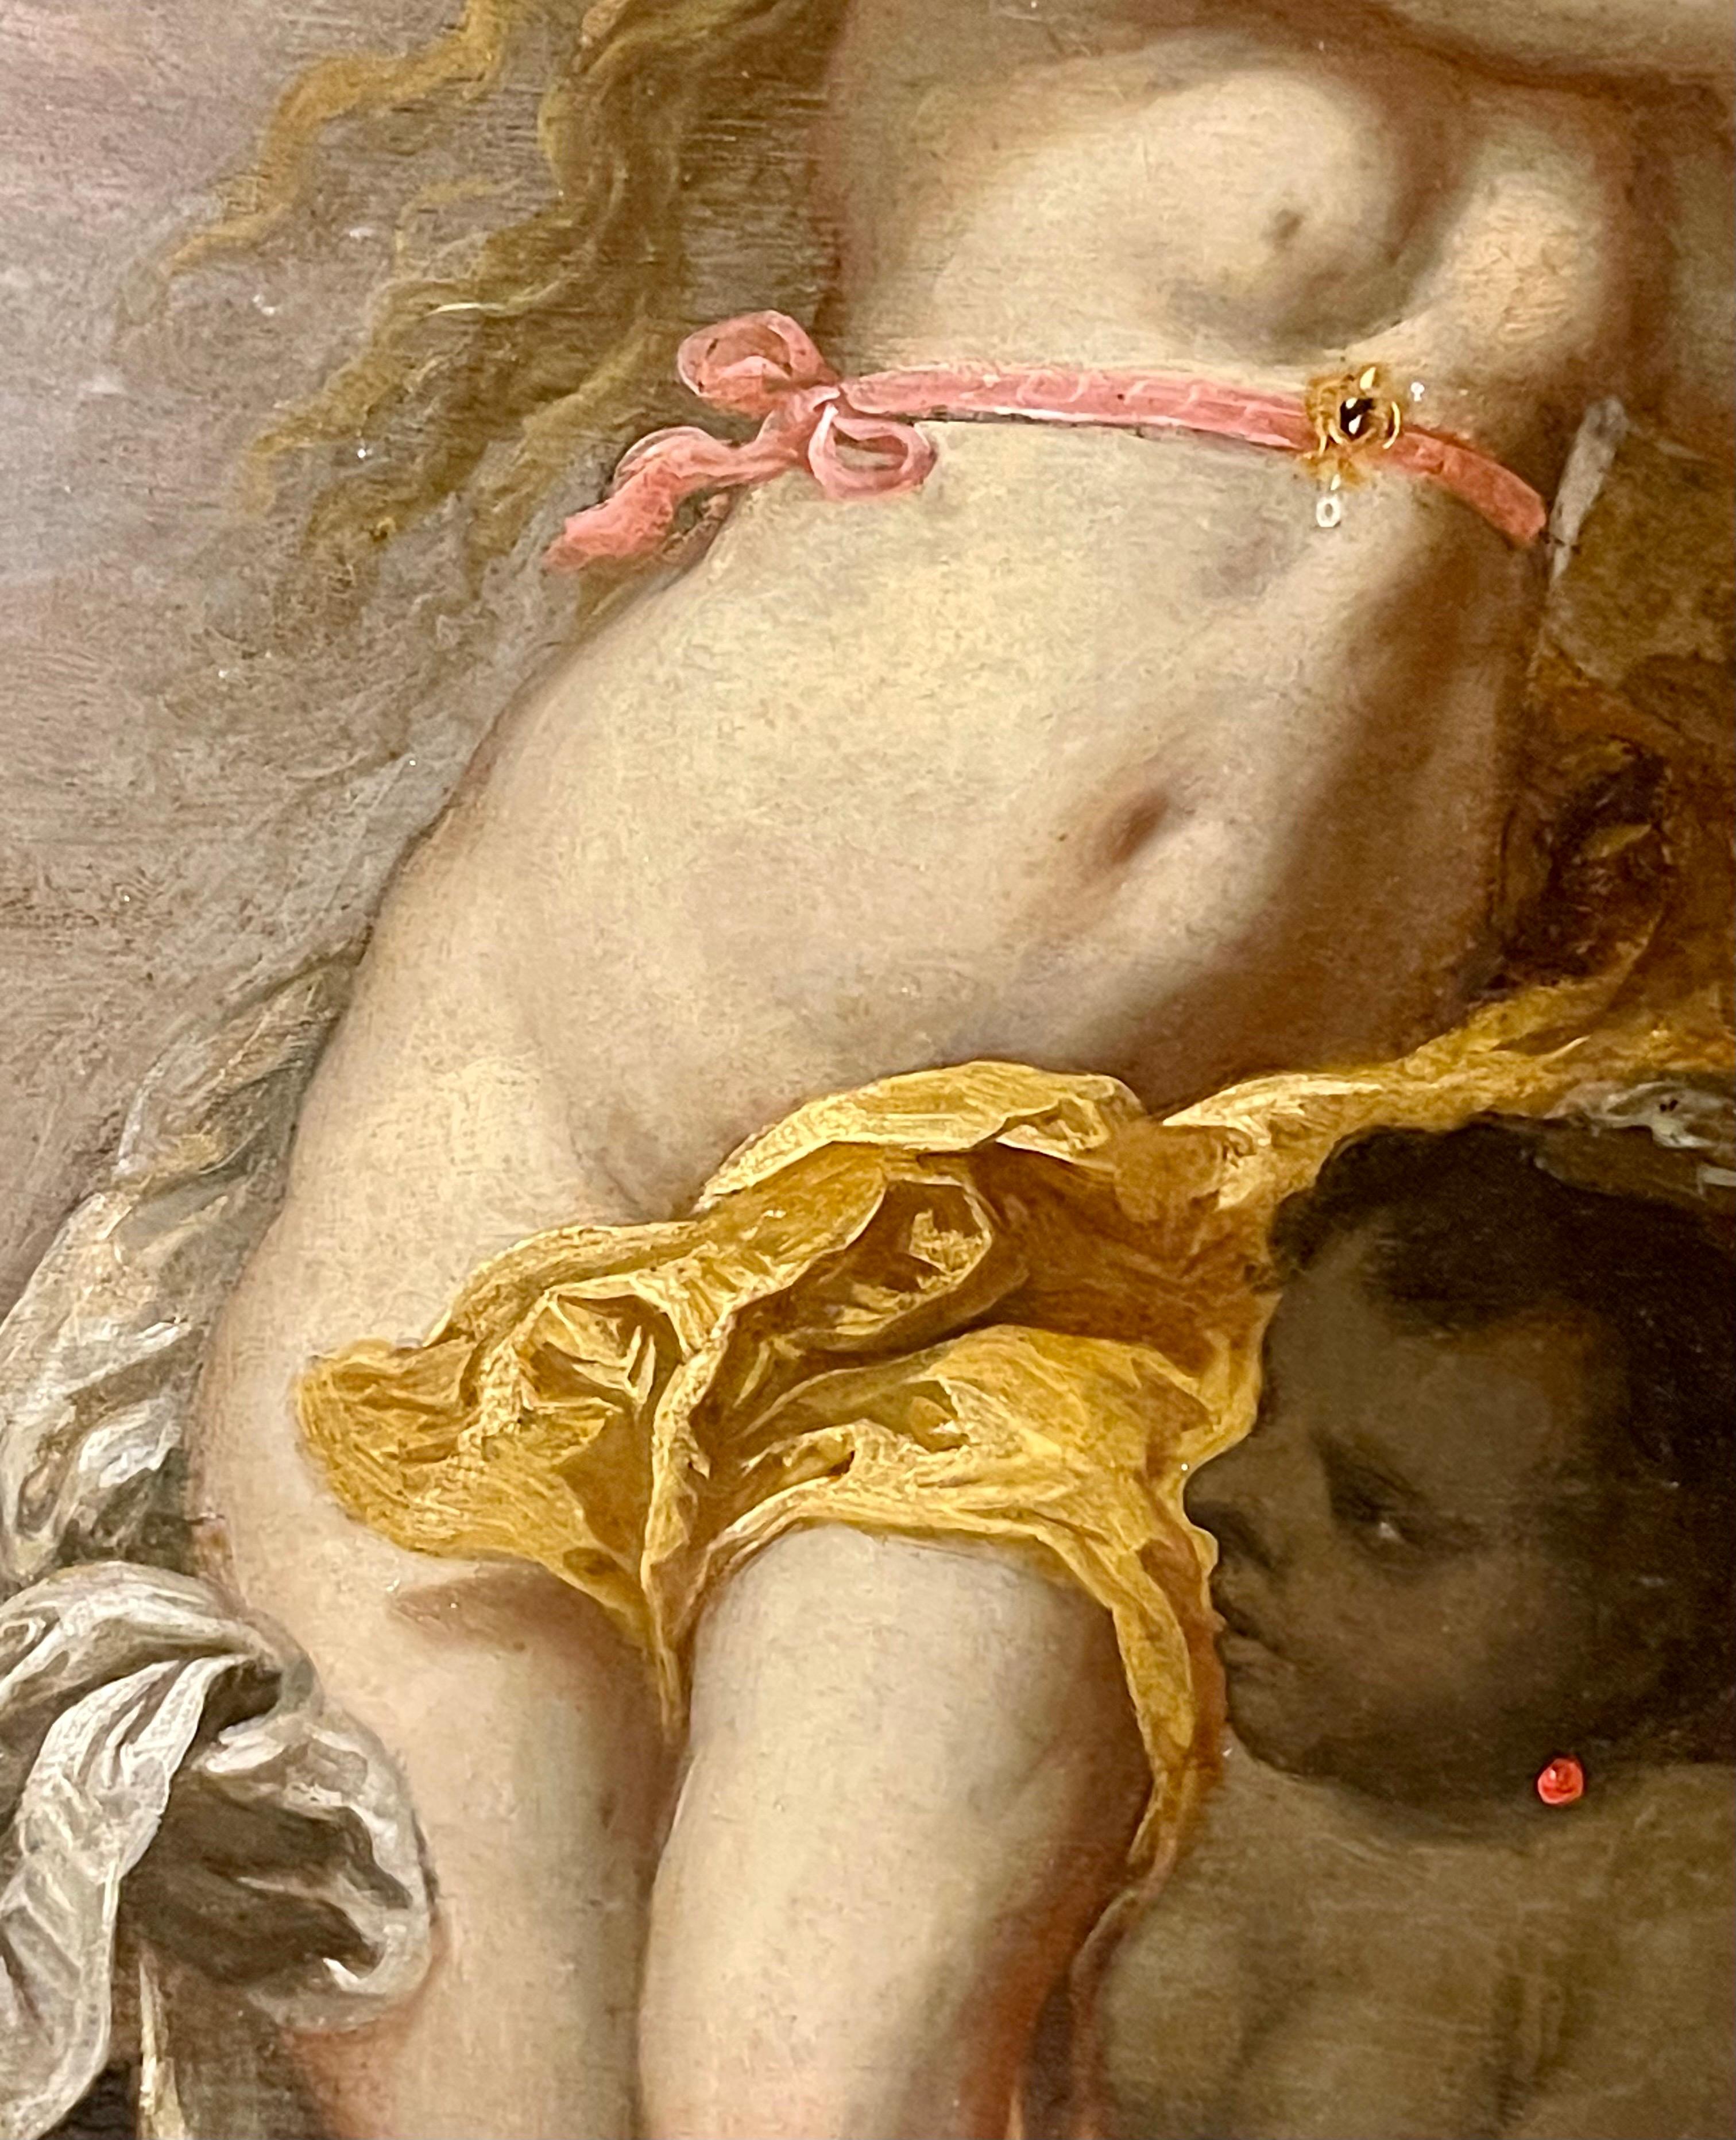 Large 17th century Flemish old master painting - Diana and Callisto - Rubens 1